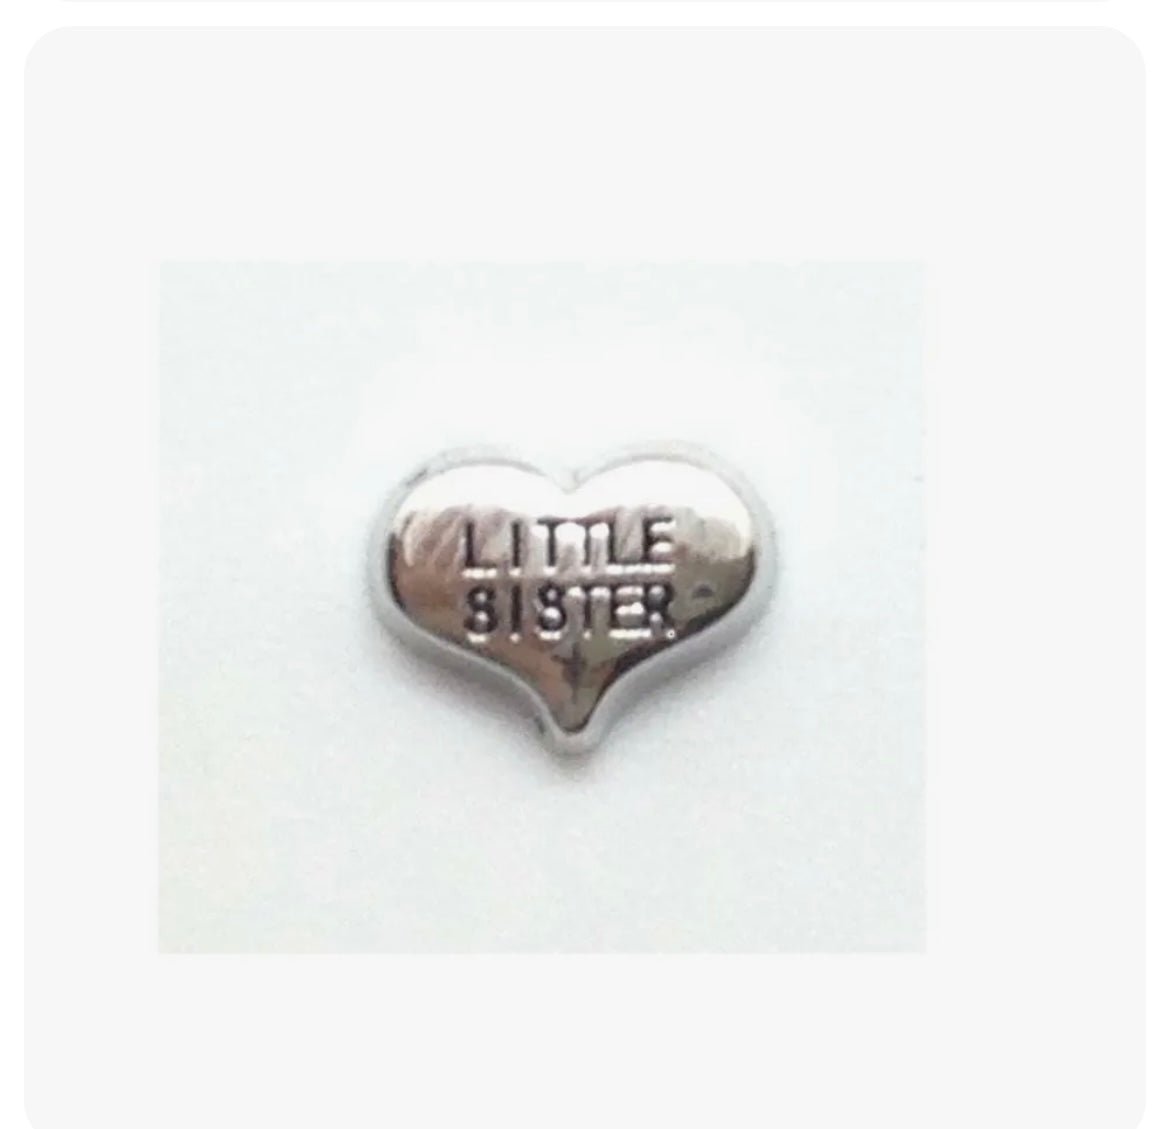 Memory Locket Charm - Little sister - The Little Jewellery Company